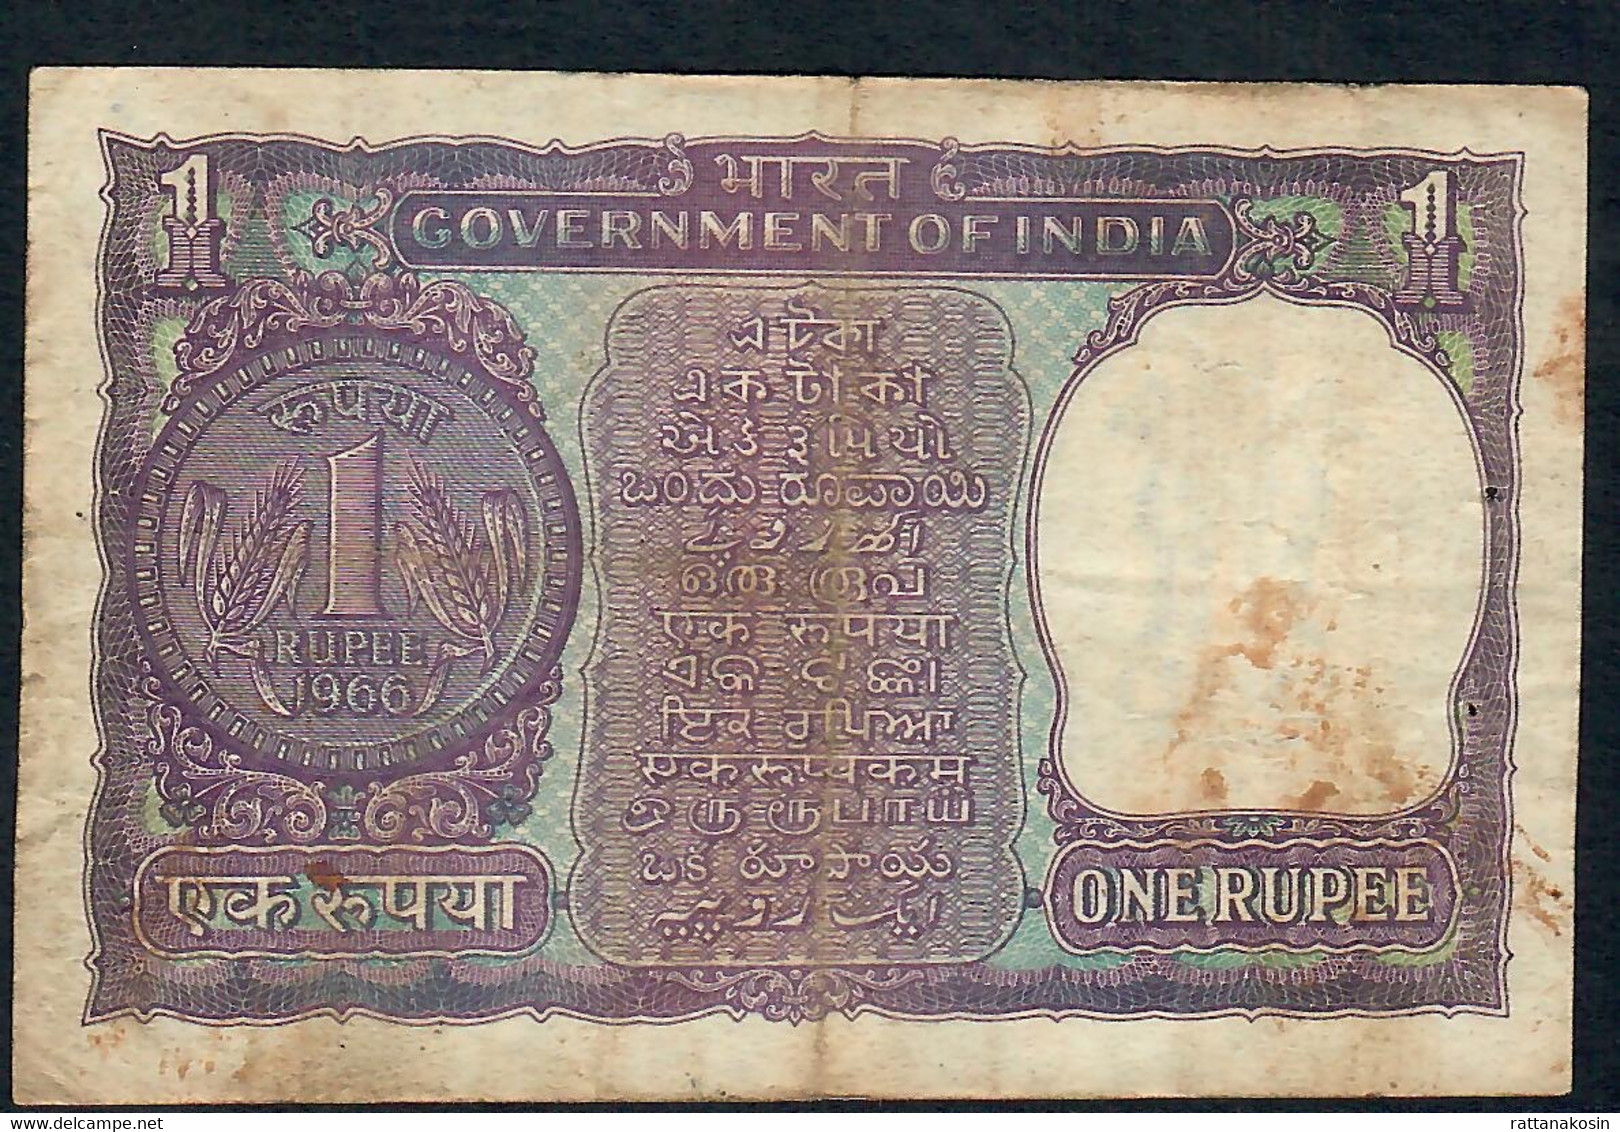 INDIA P77b  1 RUPEE 1967  Signature JAGANNATHAN  LETTER A #C/73   VF - Inde